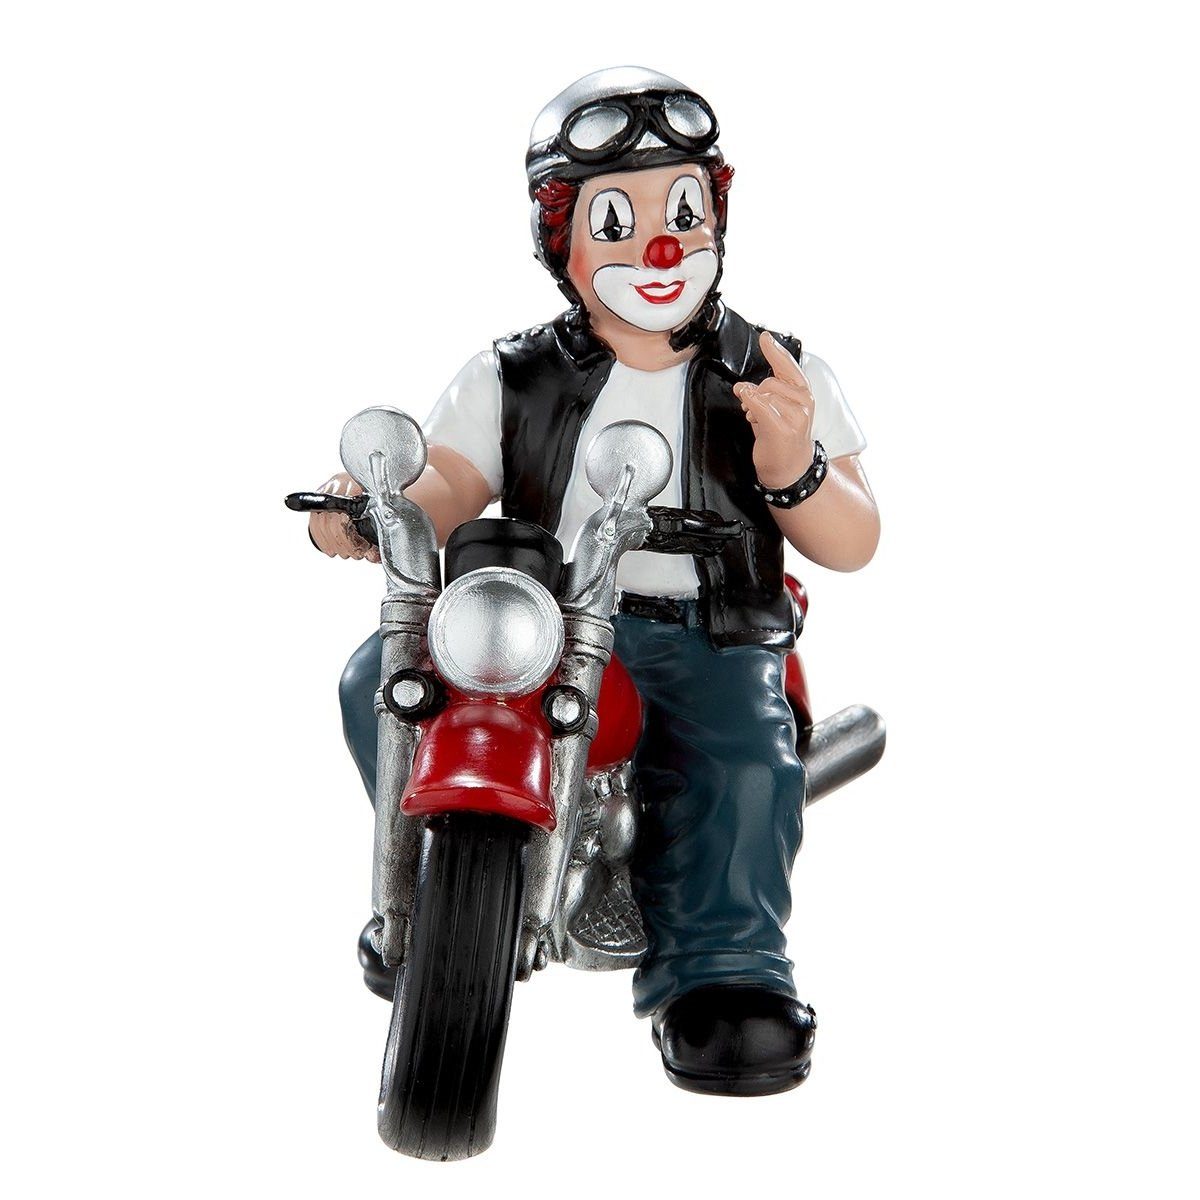 - Sammelfigur Dekofigur Indoor - GILDE Biker Heavy Clown Gildeclowns